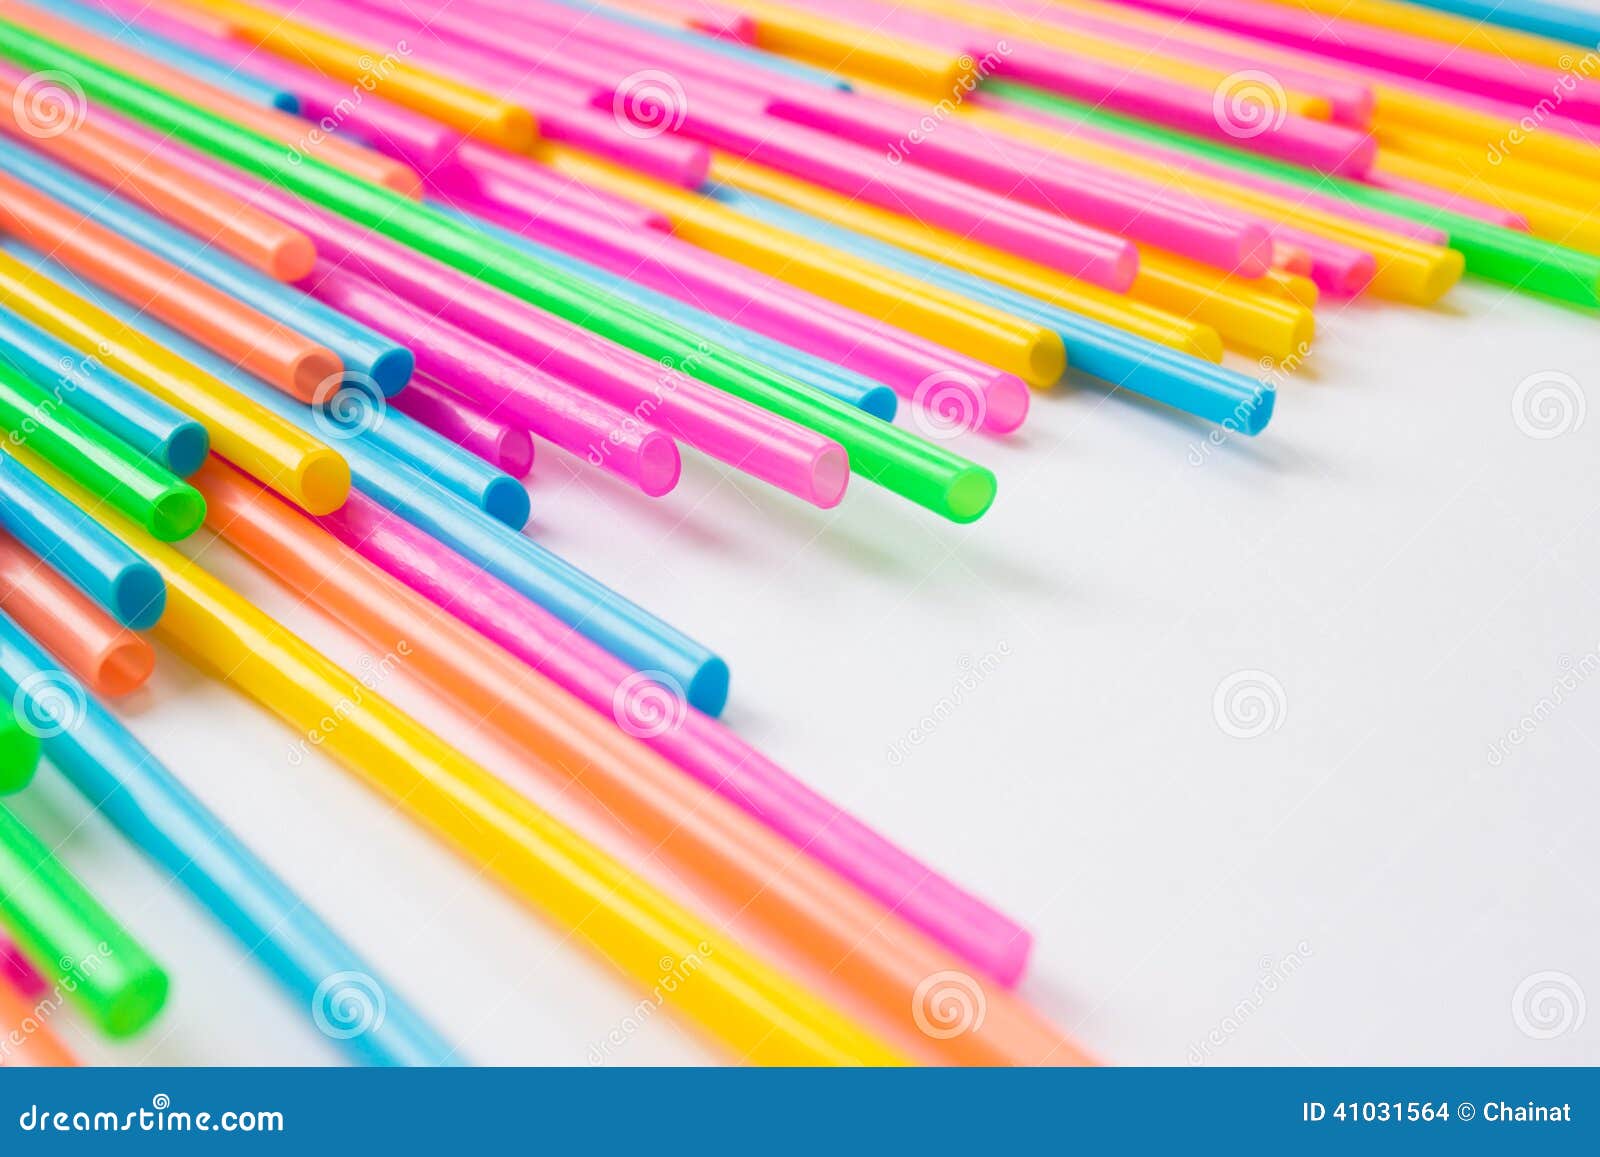 plastic tube or straw background